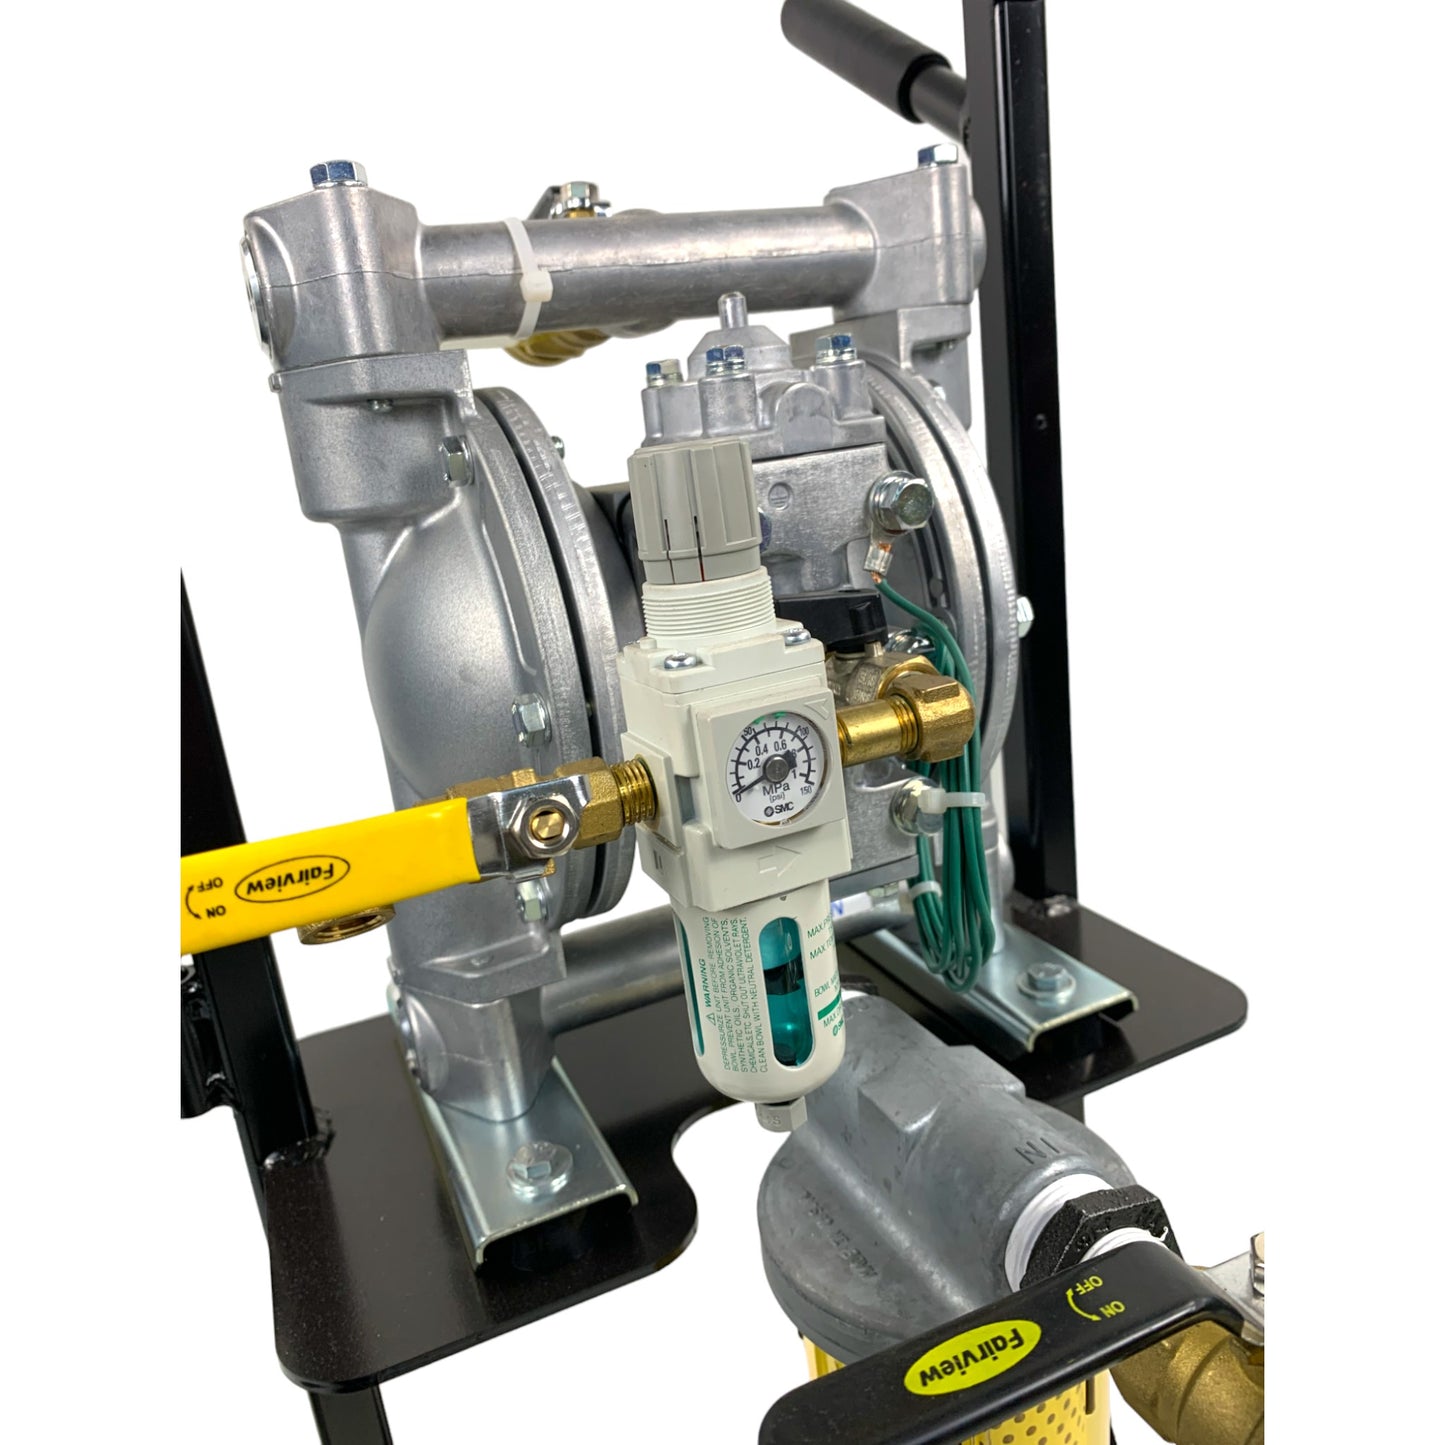 WEN101TS - Diesel Accelerator Mobile Fluid Transfer System with Heavy Duty Diaphragm Air Pump